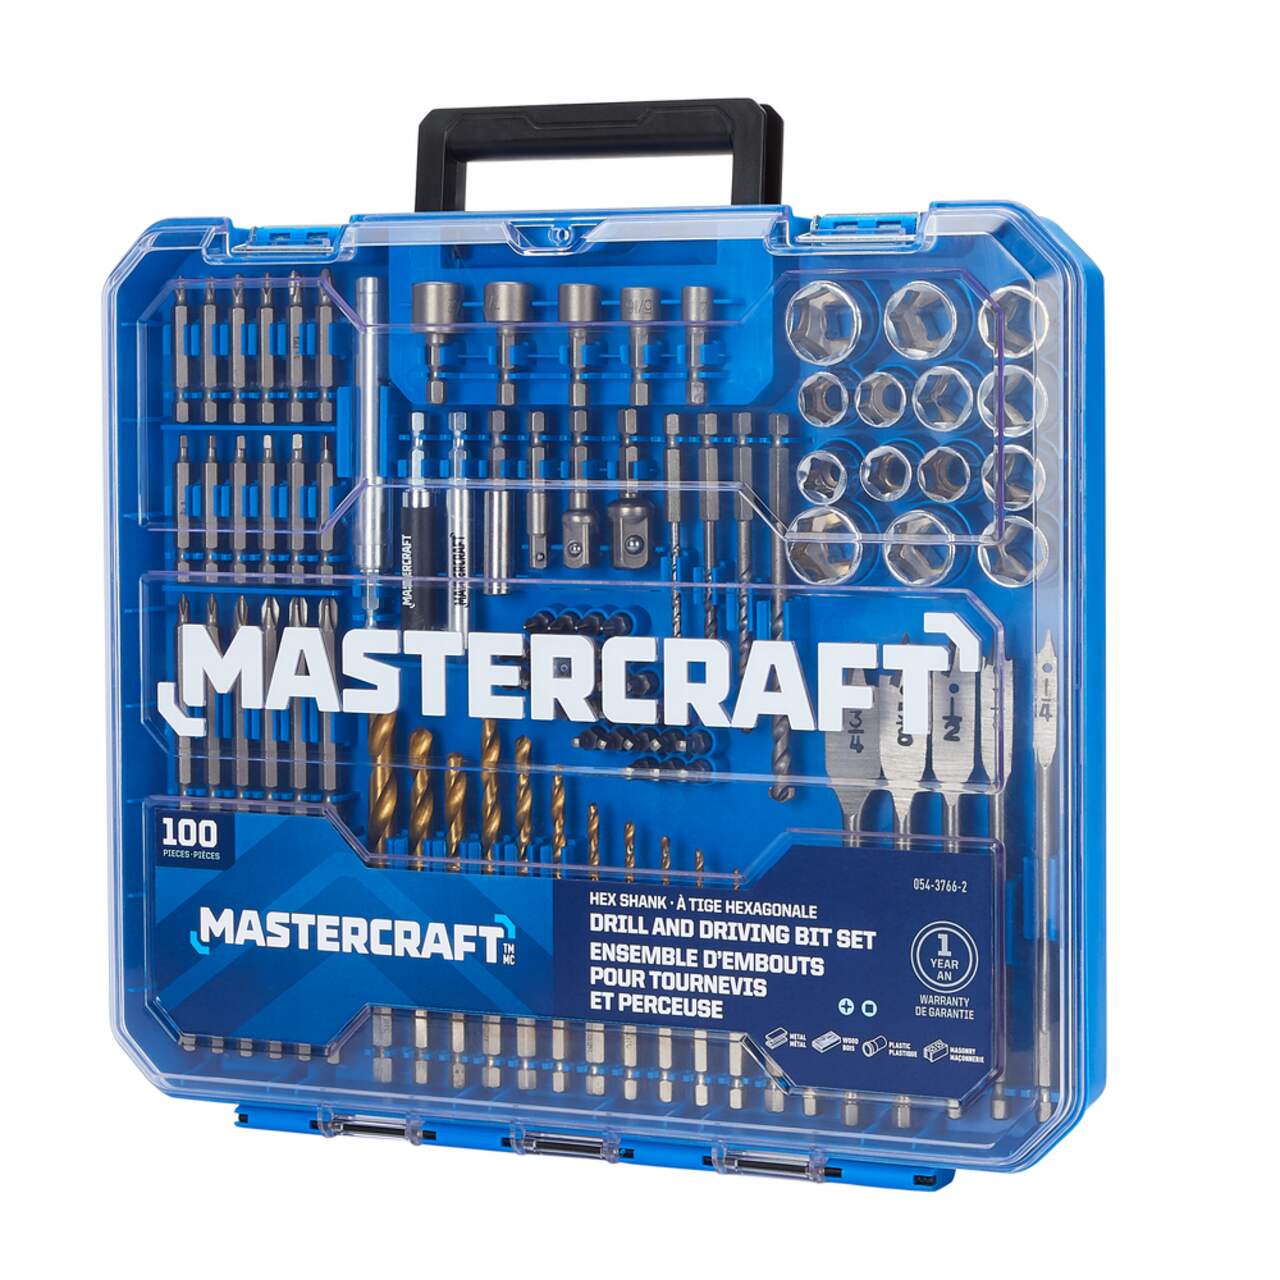 Mastercraft Hex Shank Drill & Drive Set for Wood, Metal, Plastic, Masonry,  100-pc